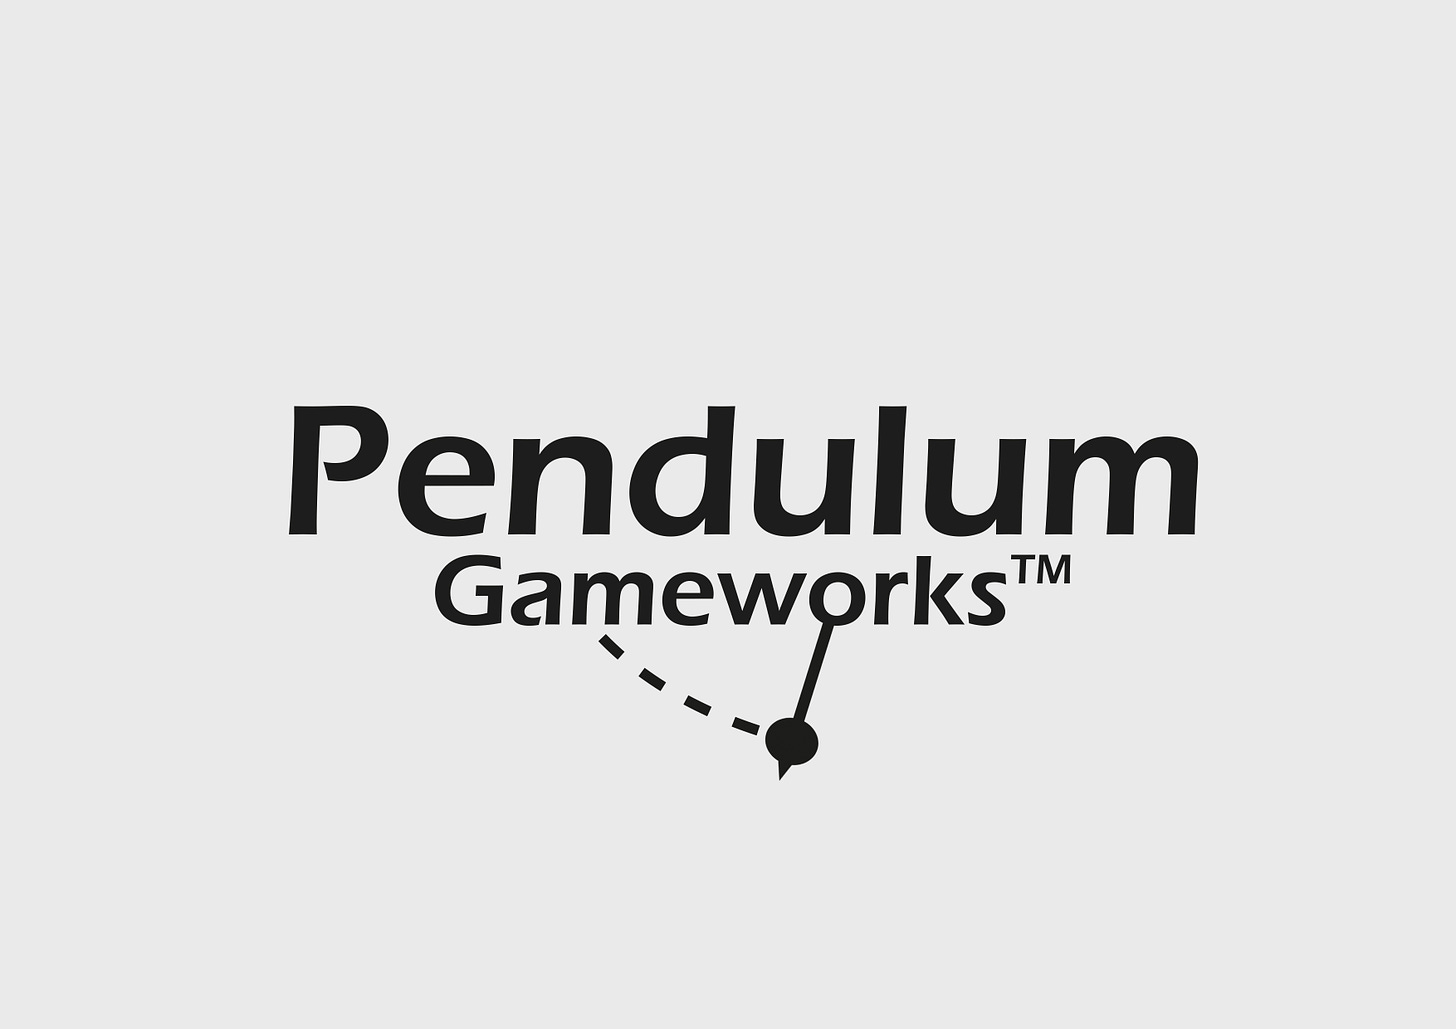 The logo for Pendulum Gameworks.